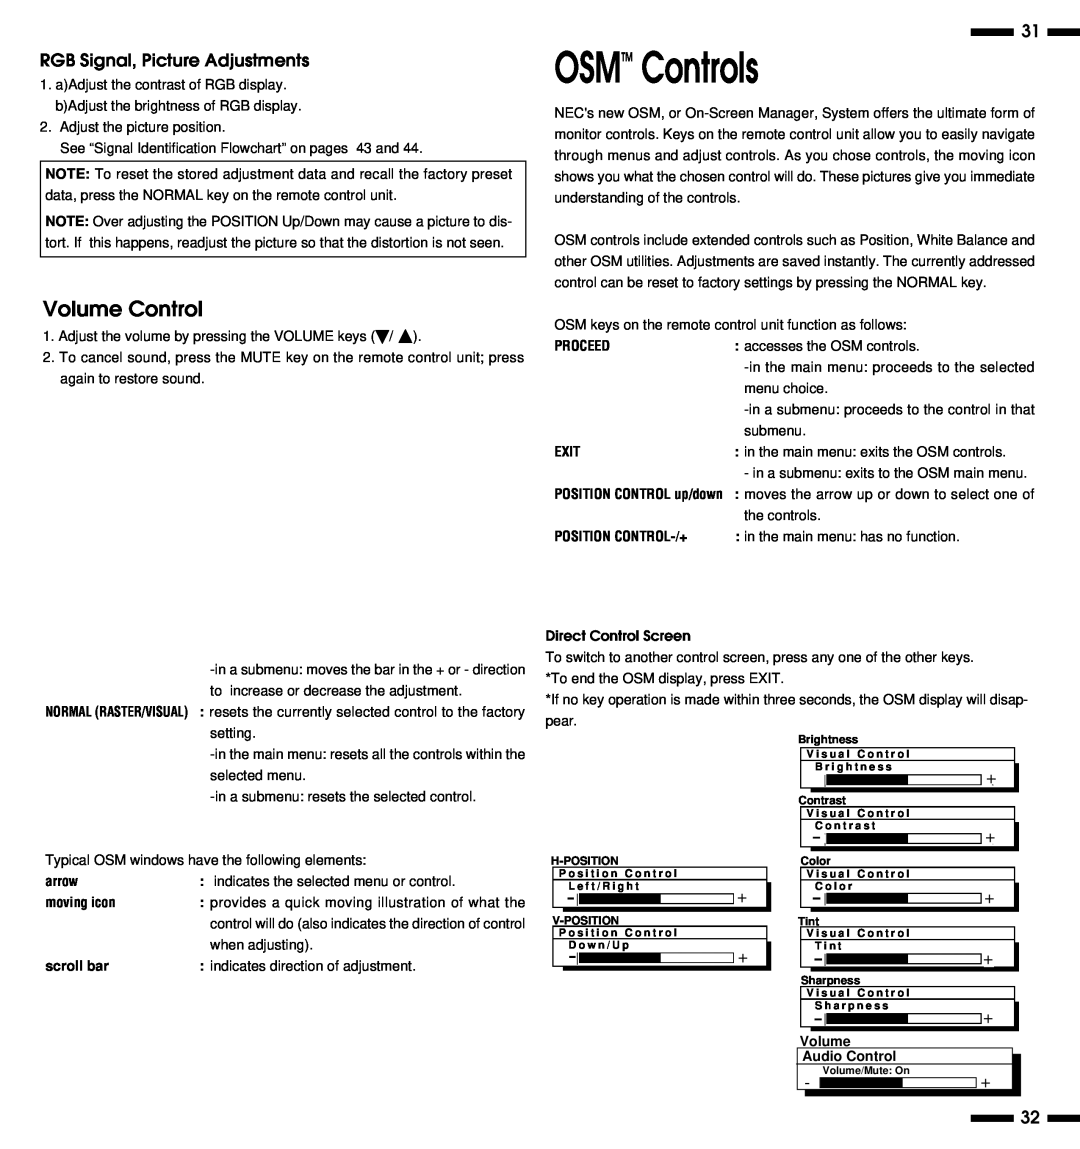 NEC PlasmaSync 3300 user manual OSMTM Controls, Volume Control 